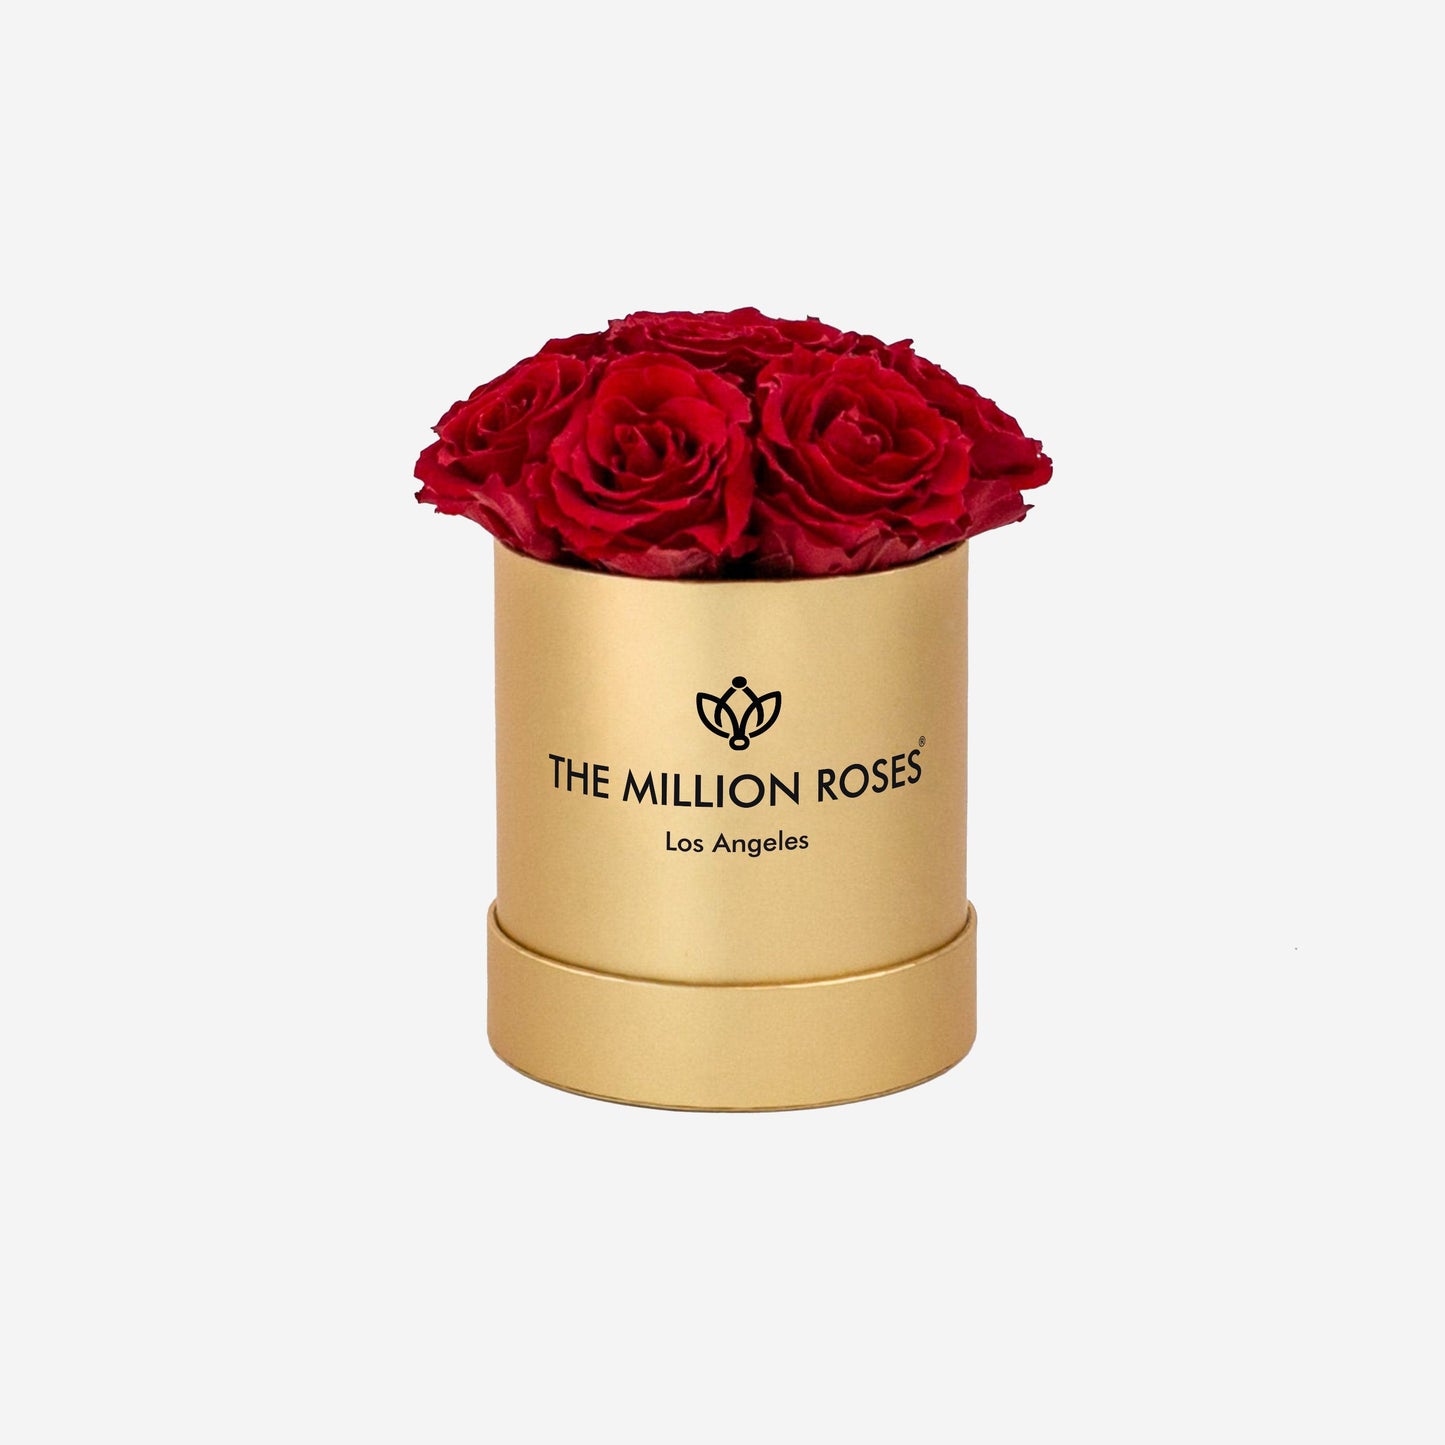 Basic Gold Box | Red Roses - The Million Roses